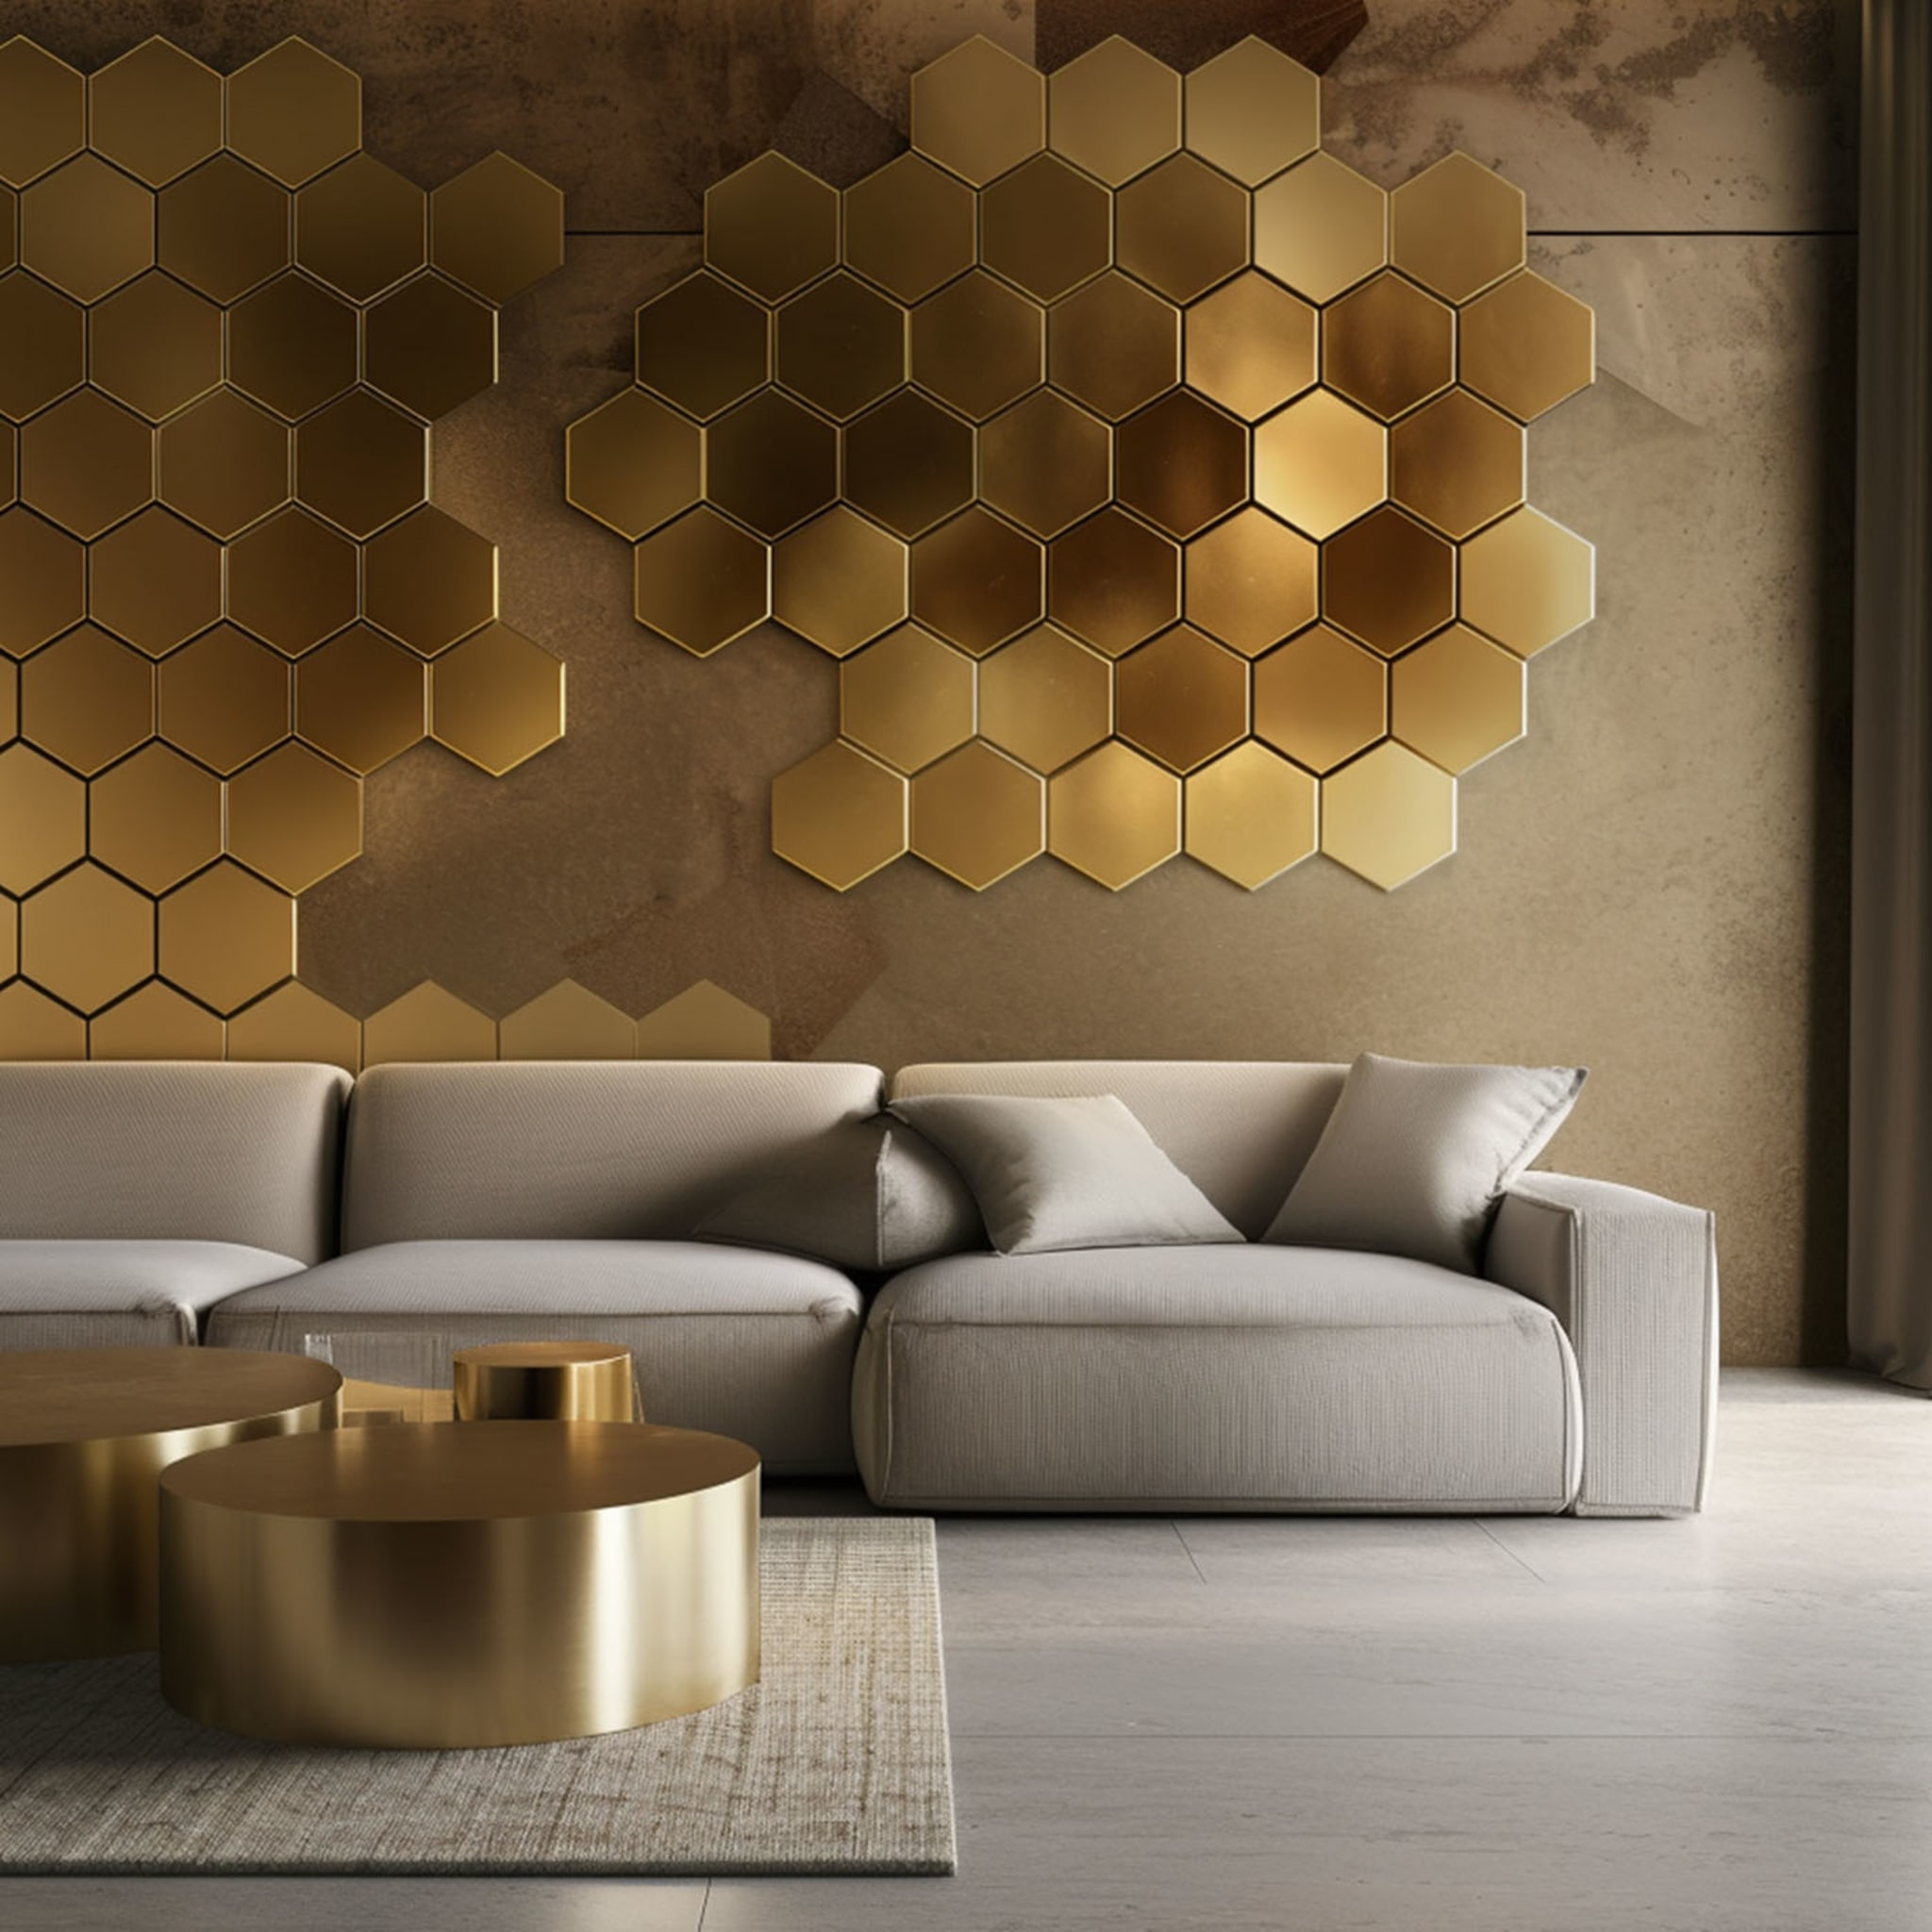 Infinito Set of 20 Hexagonal Scruffy-Looking Brass Tiles - Alternative view 2